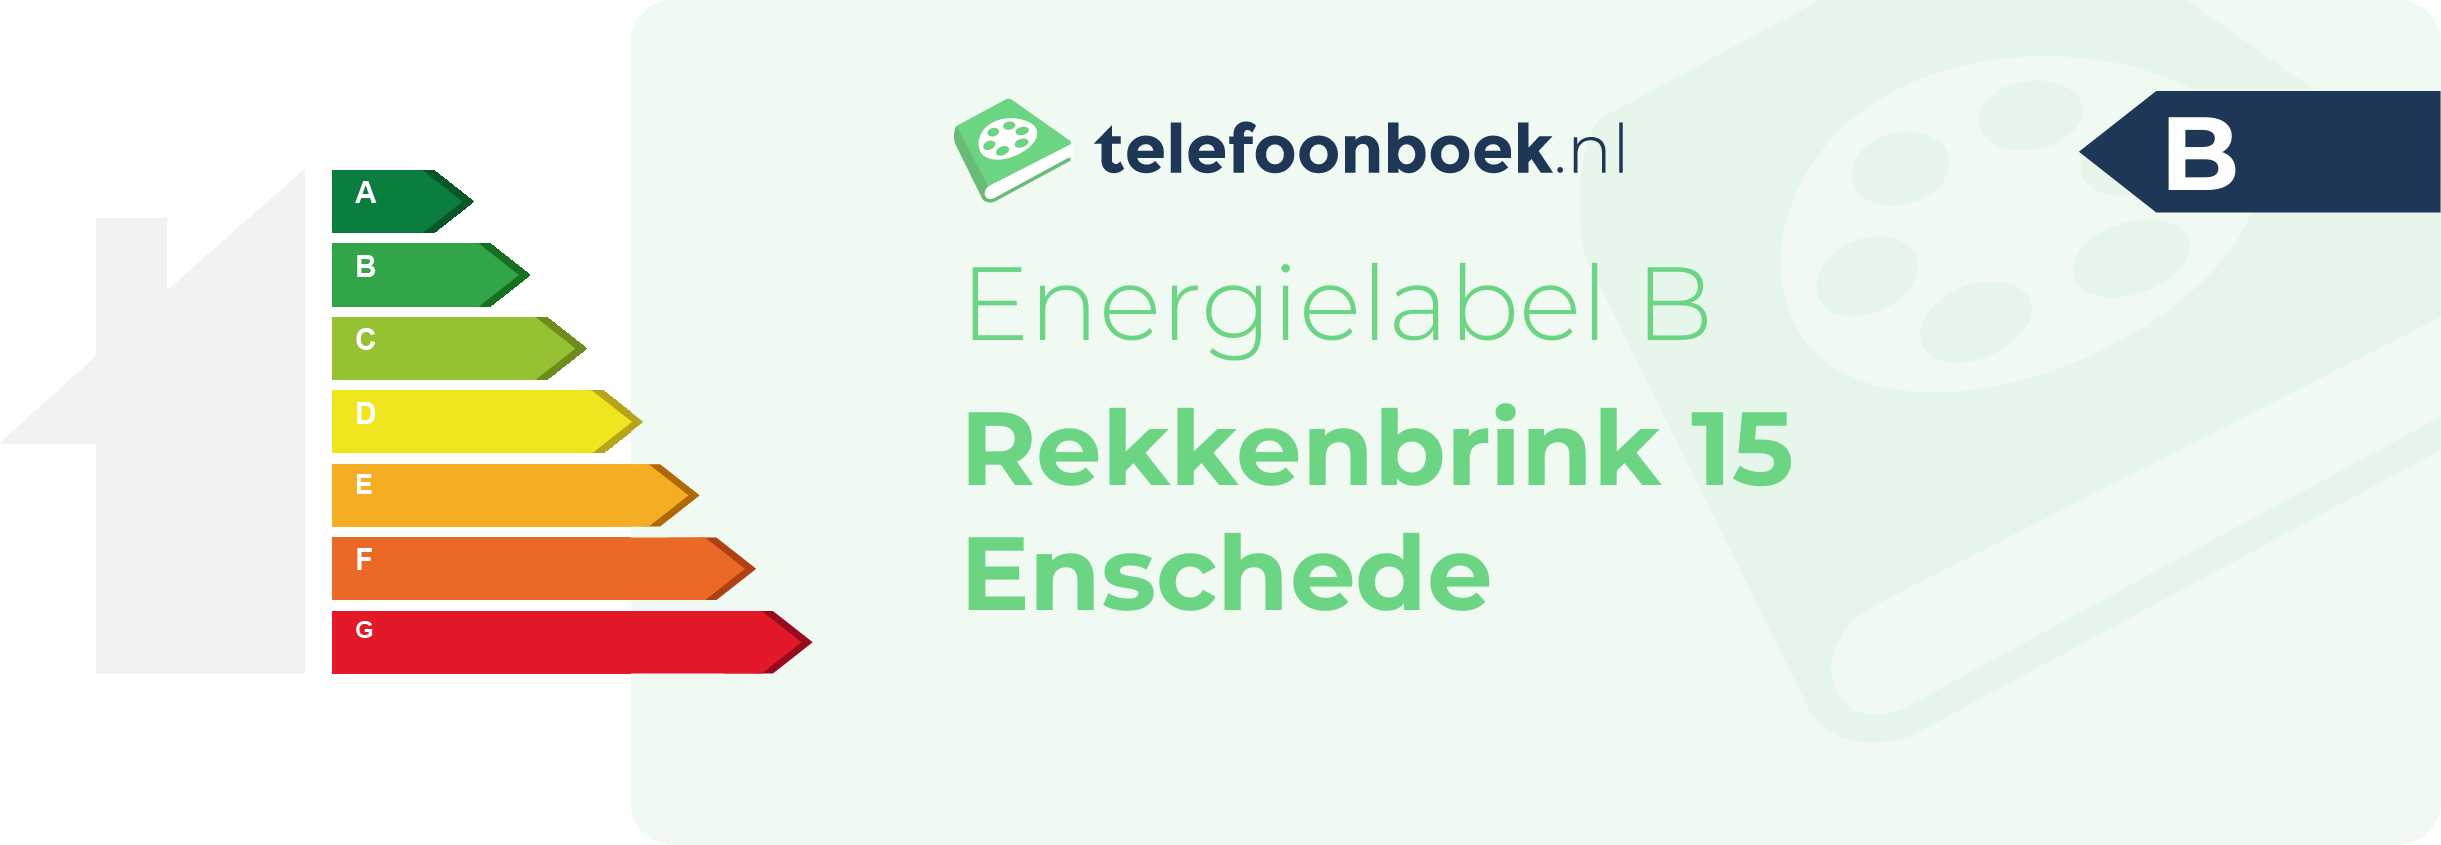 Energielabel Rekkenbrink 15 Enschede